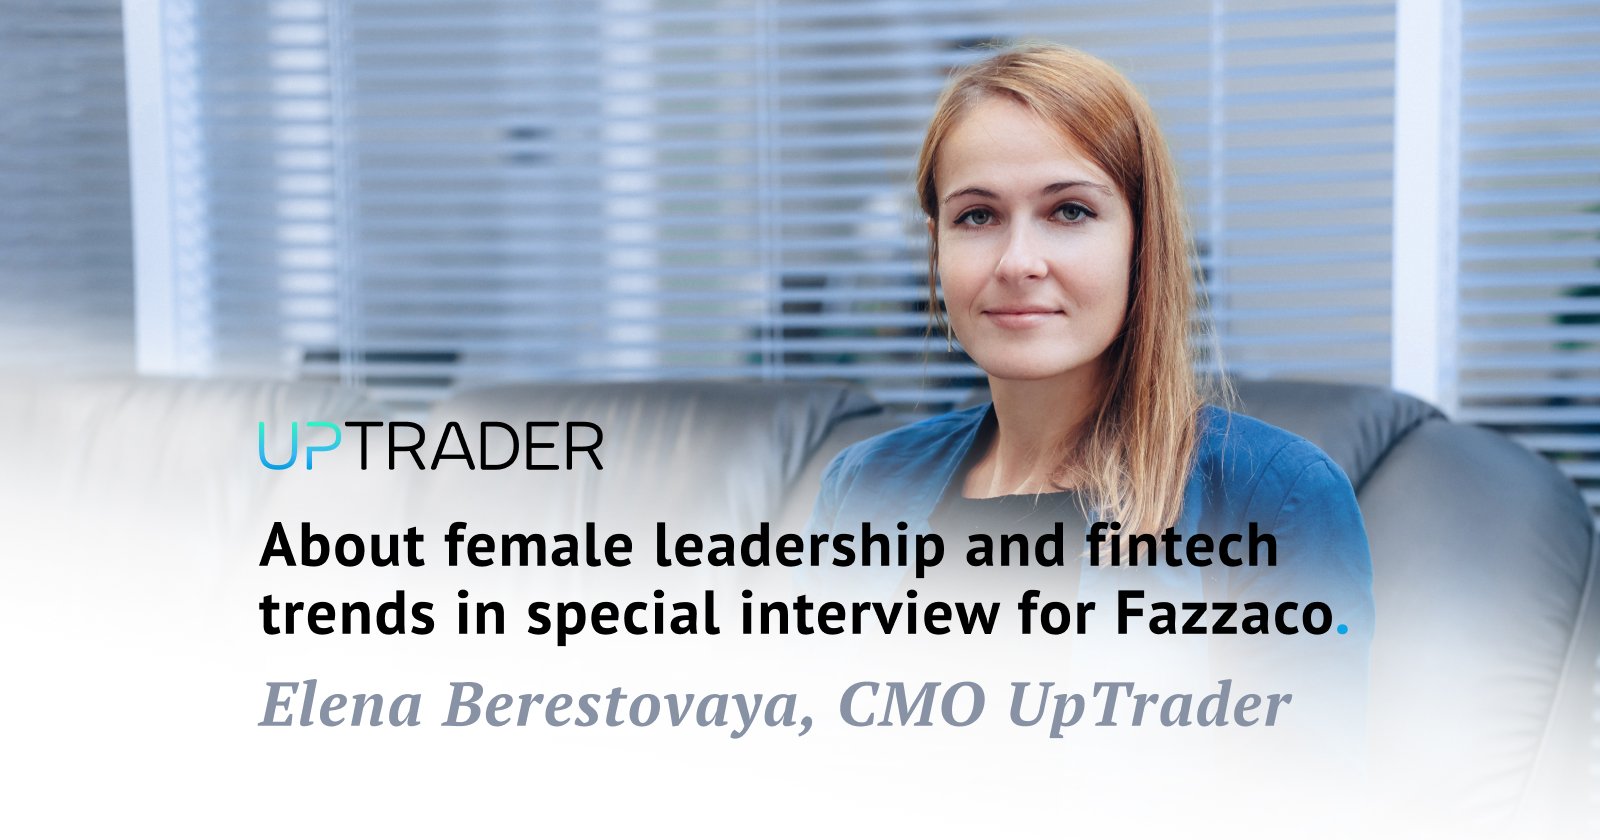 On the eve of International Women's Day, Elena Berestovaya, CMO UpTrader, shared her prospective on female leadership and fintech trends.